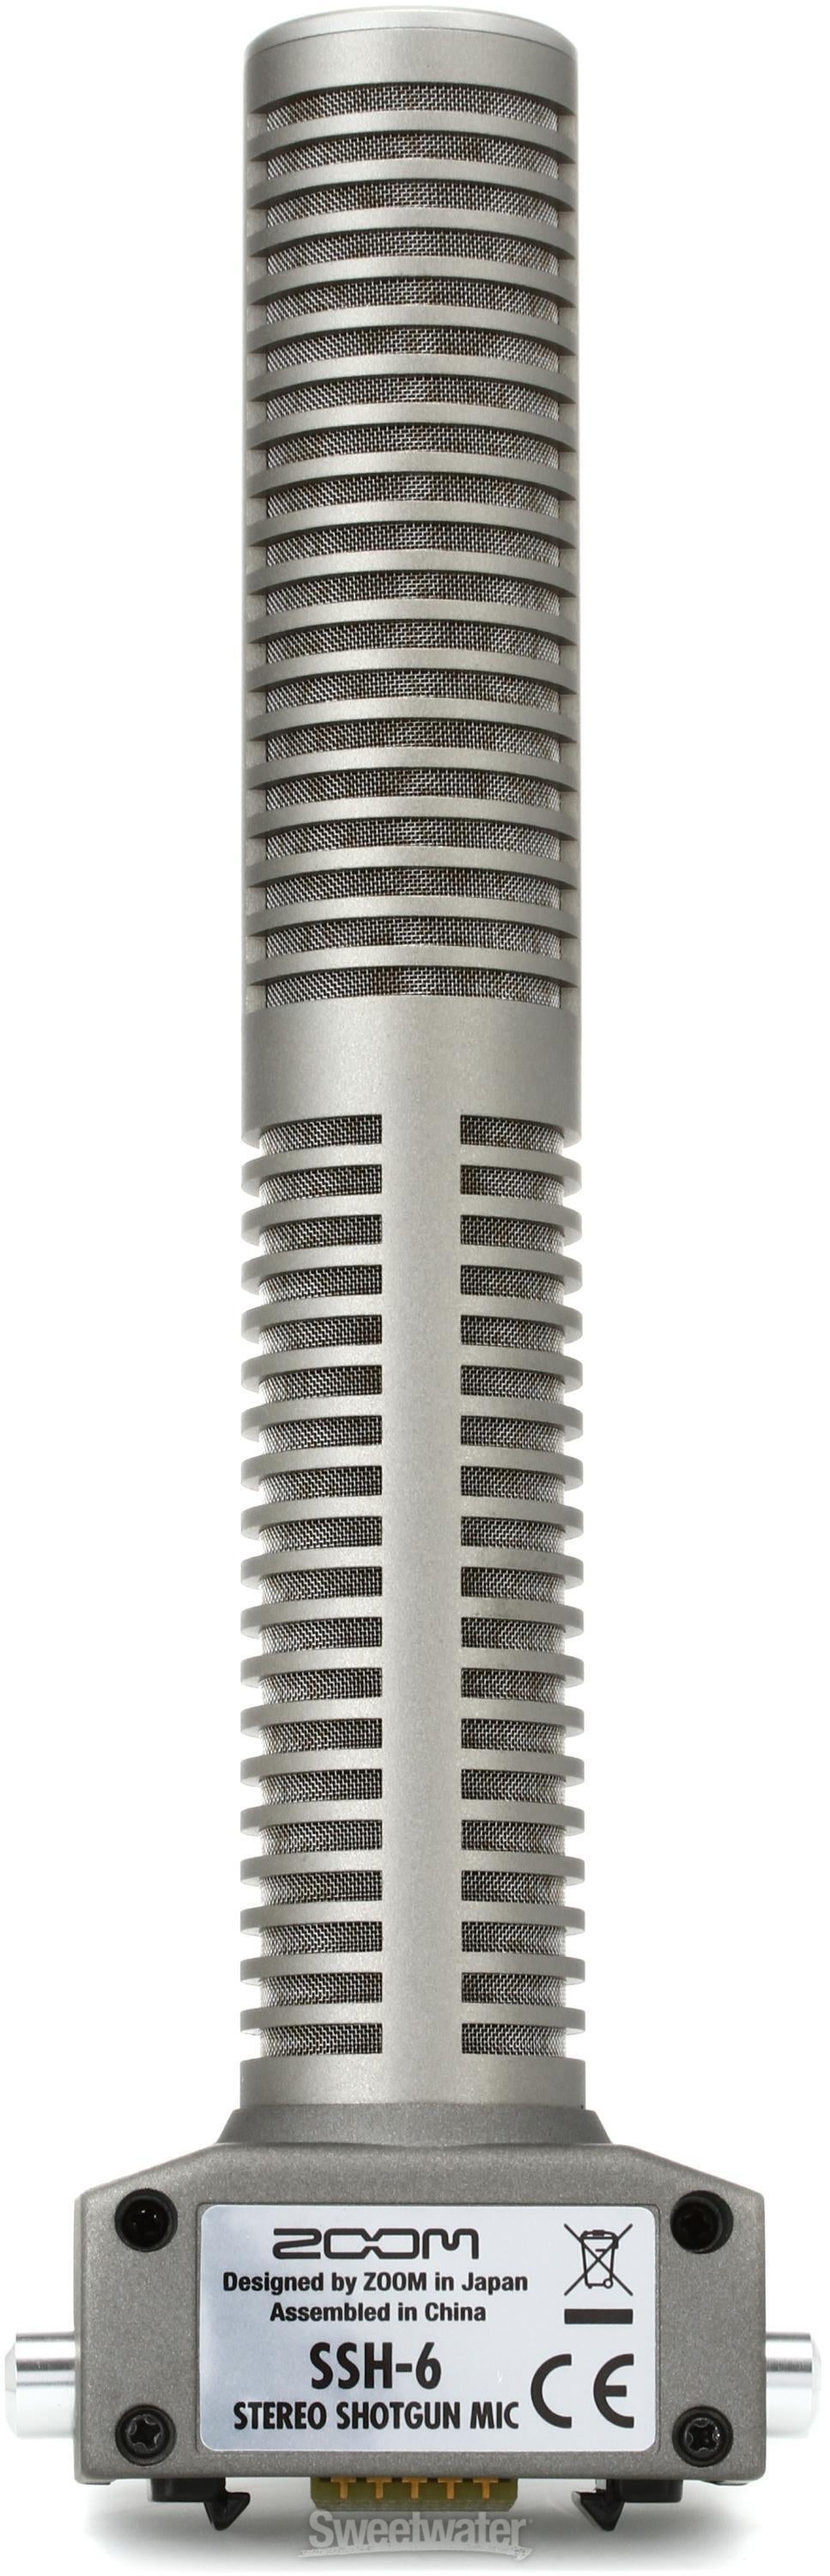 Zoom SSH-6 Stereo Shotgun Microphone Capsule